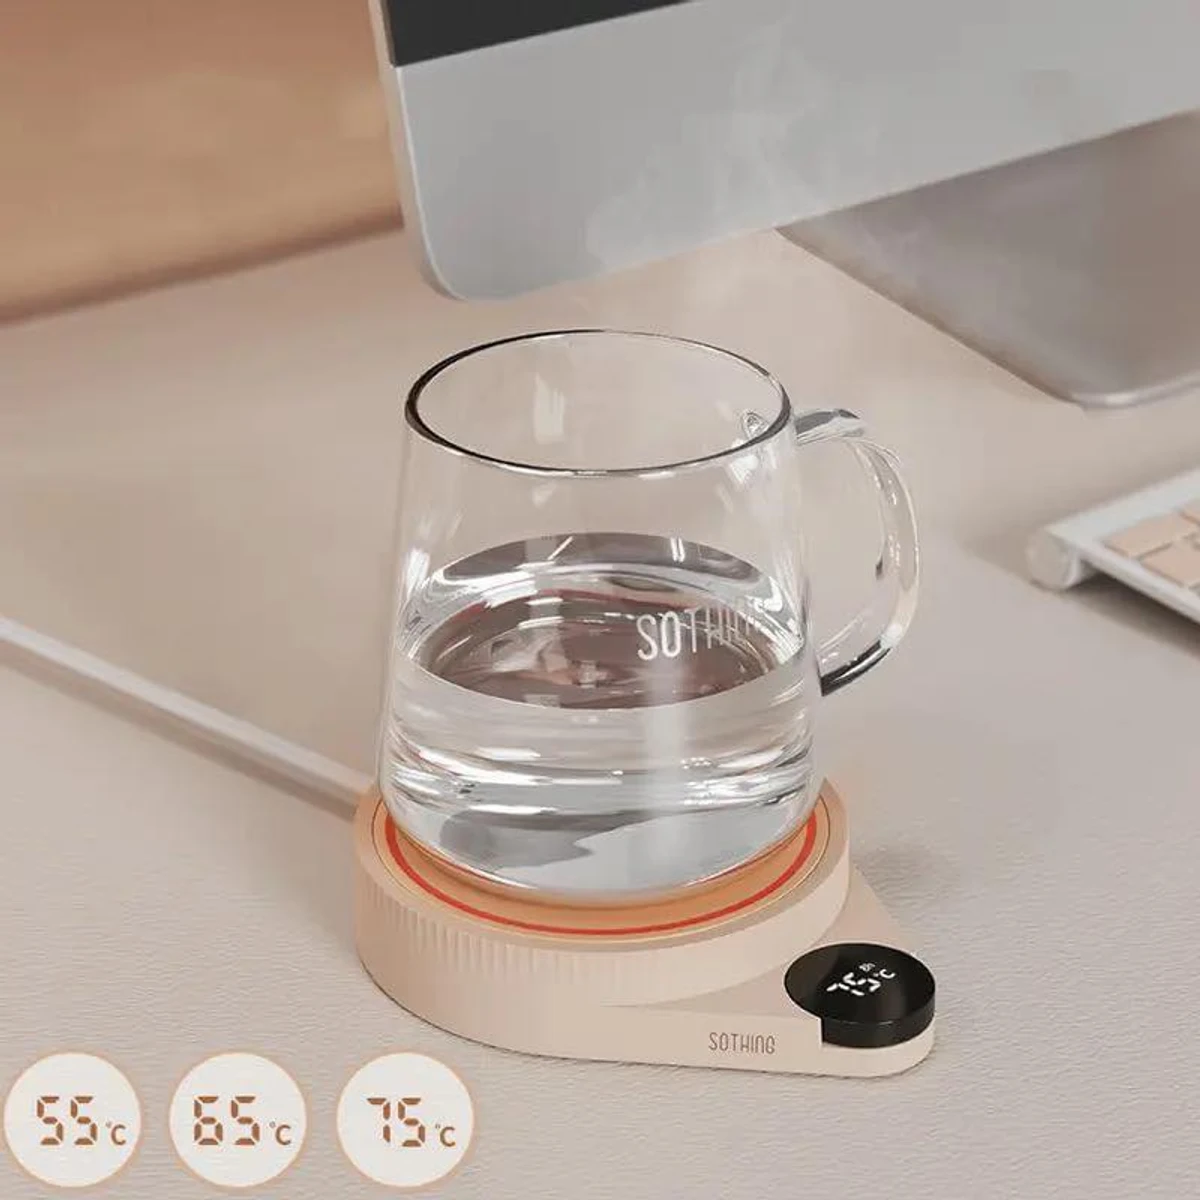 Xiaomi Sothing Adjustable Digital Display Electric heating coaster